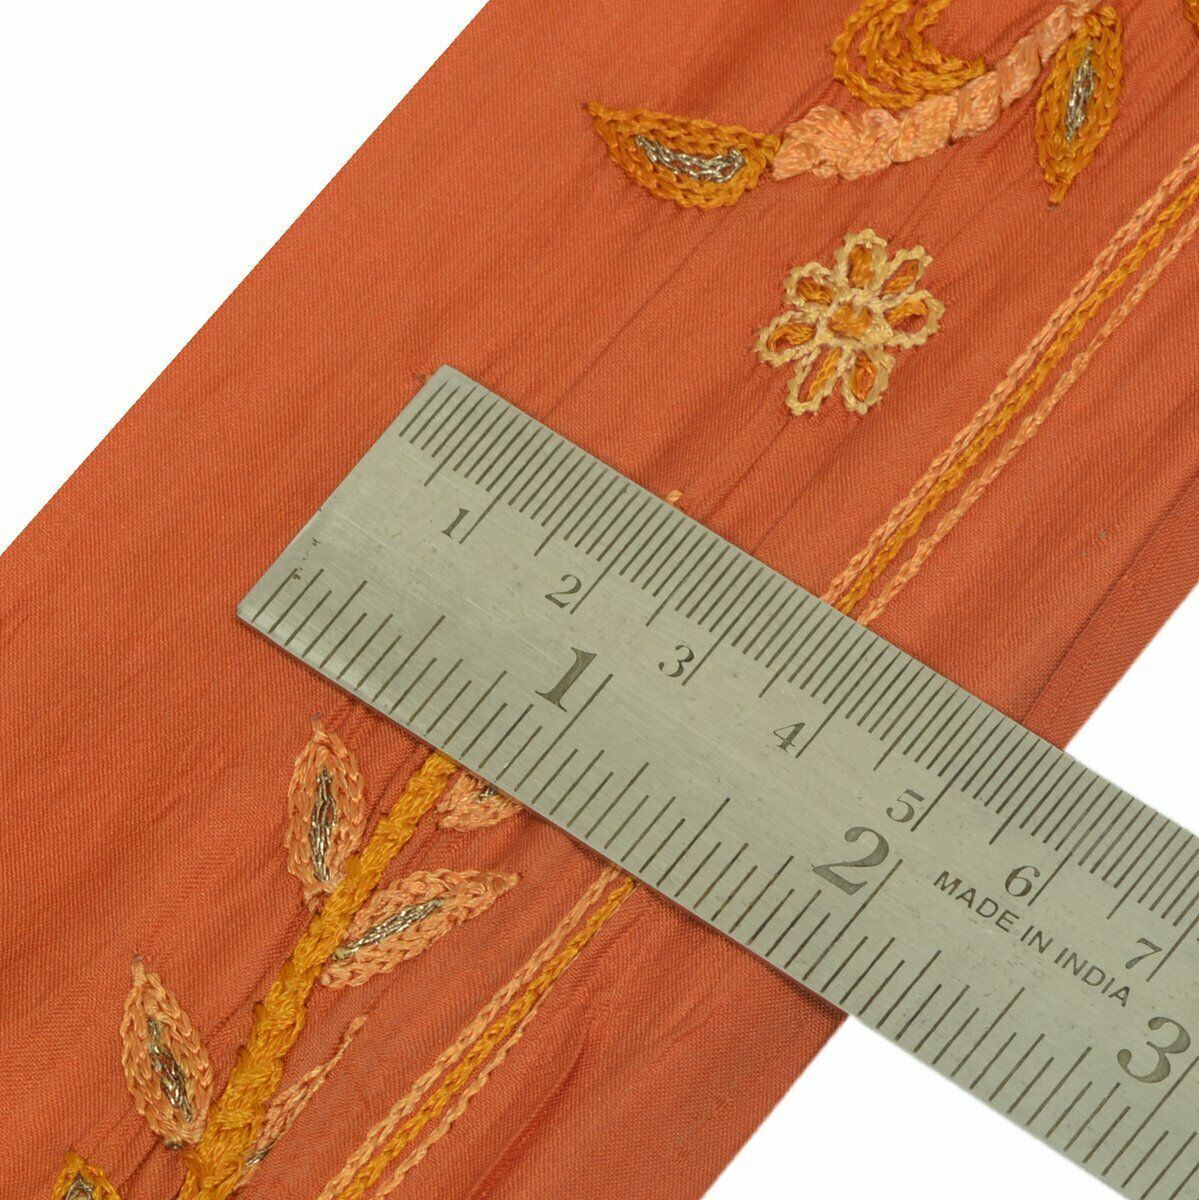 Vintage Sari Border Indian Craft Trim Antique Lace Hand Embroidered Rust Ribbon